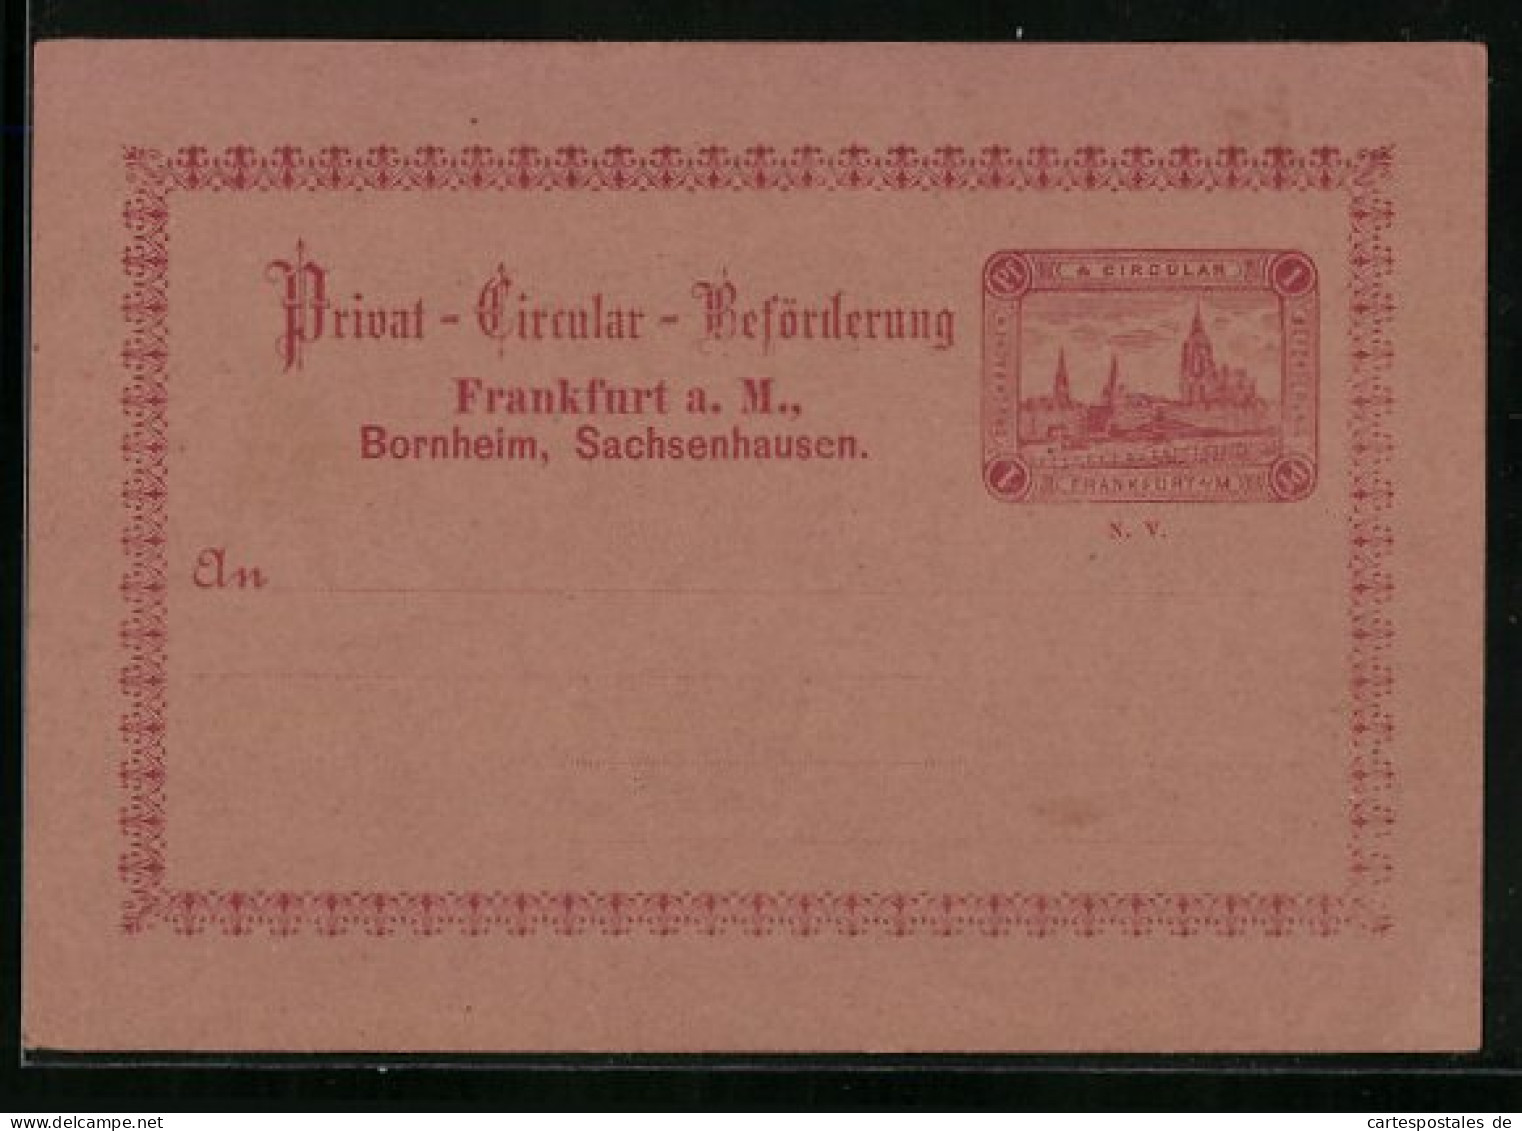 AK Privat-Circular-Beförderung, Frankfurt A. M., Bornheim, Sachsenhausen, Ganzsache  - Stamps (pictures)